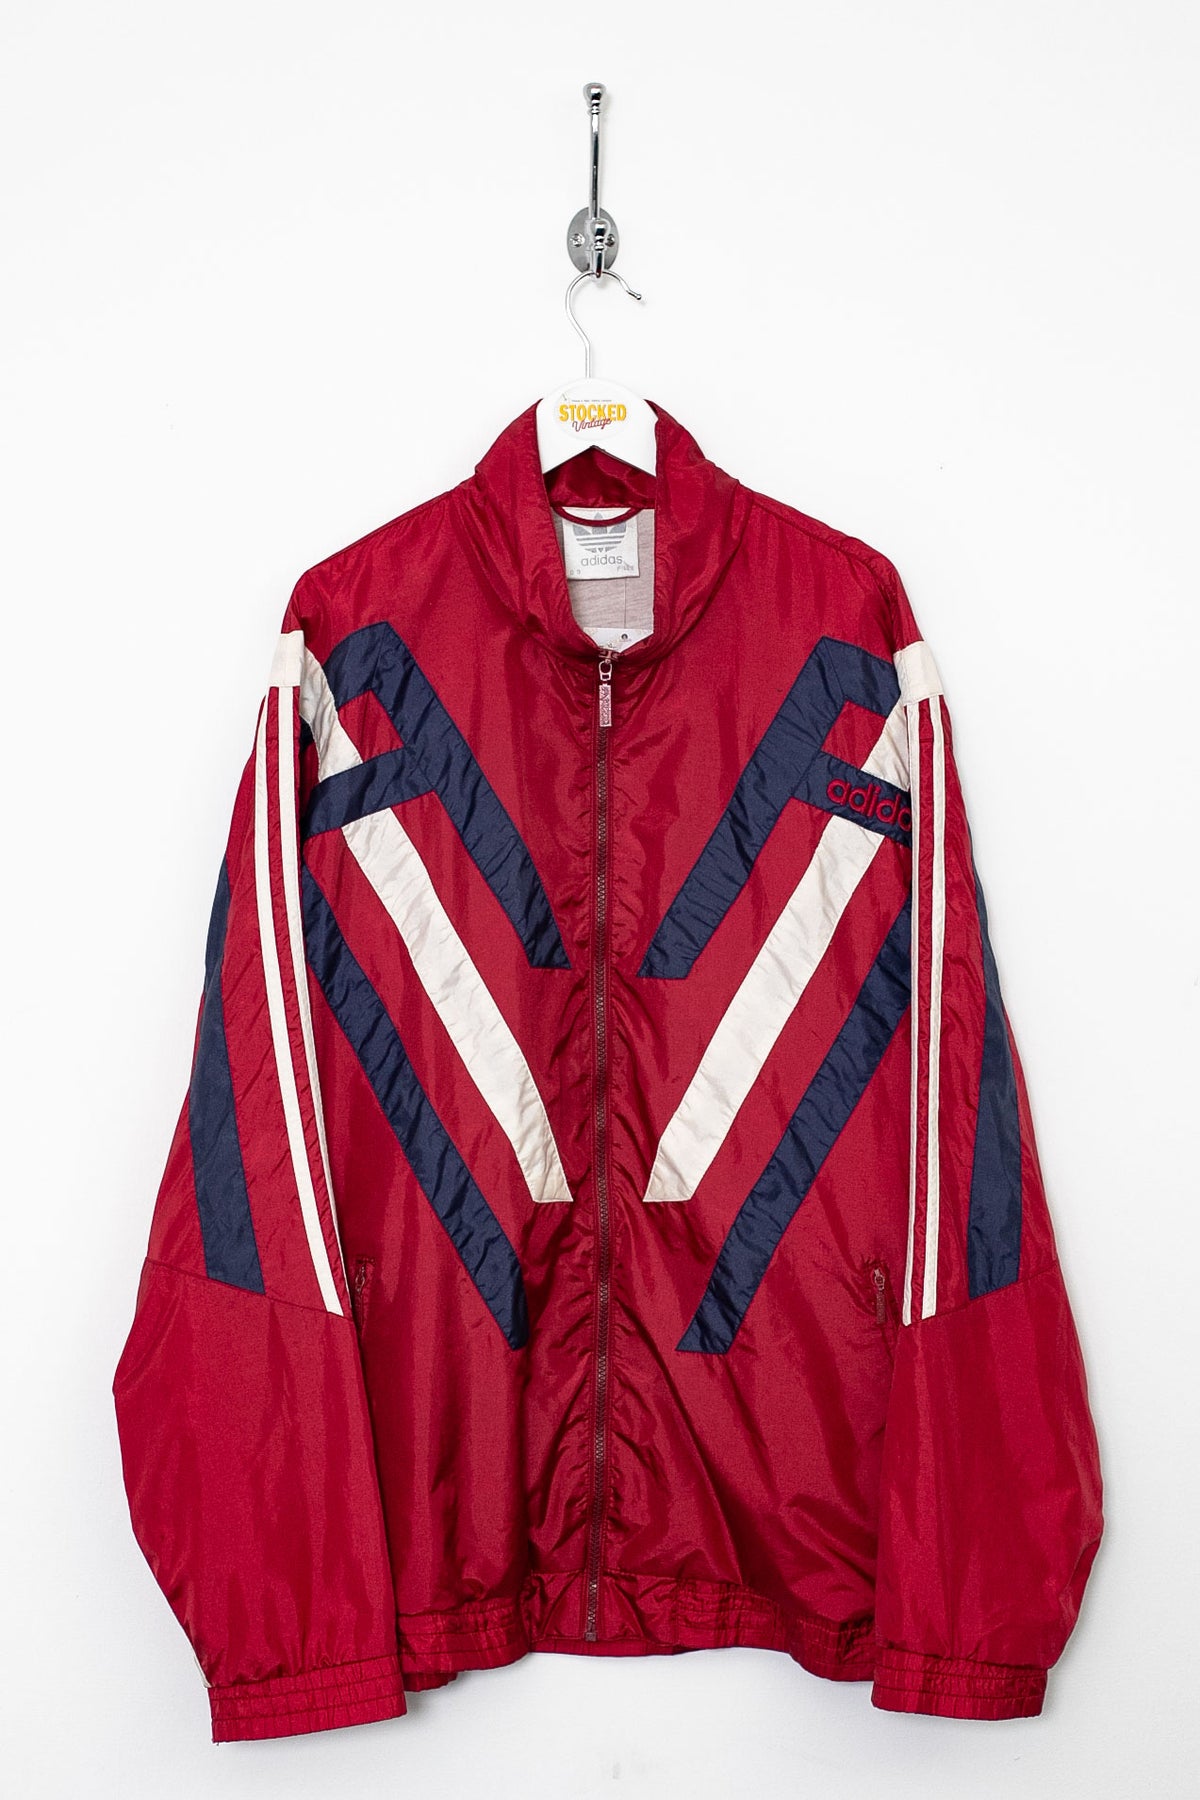 90s Adidas Jacket (XL)